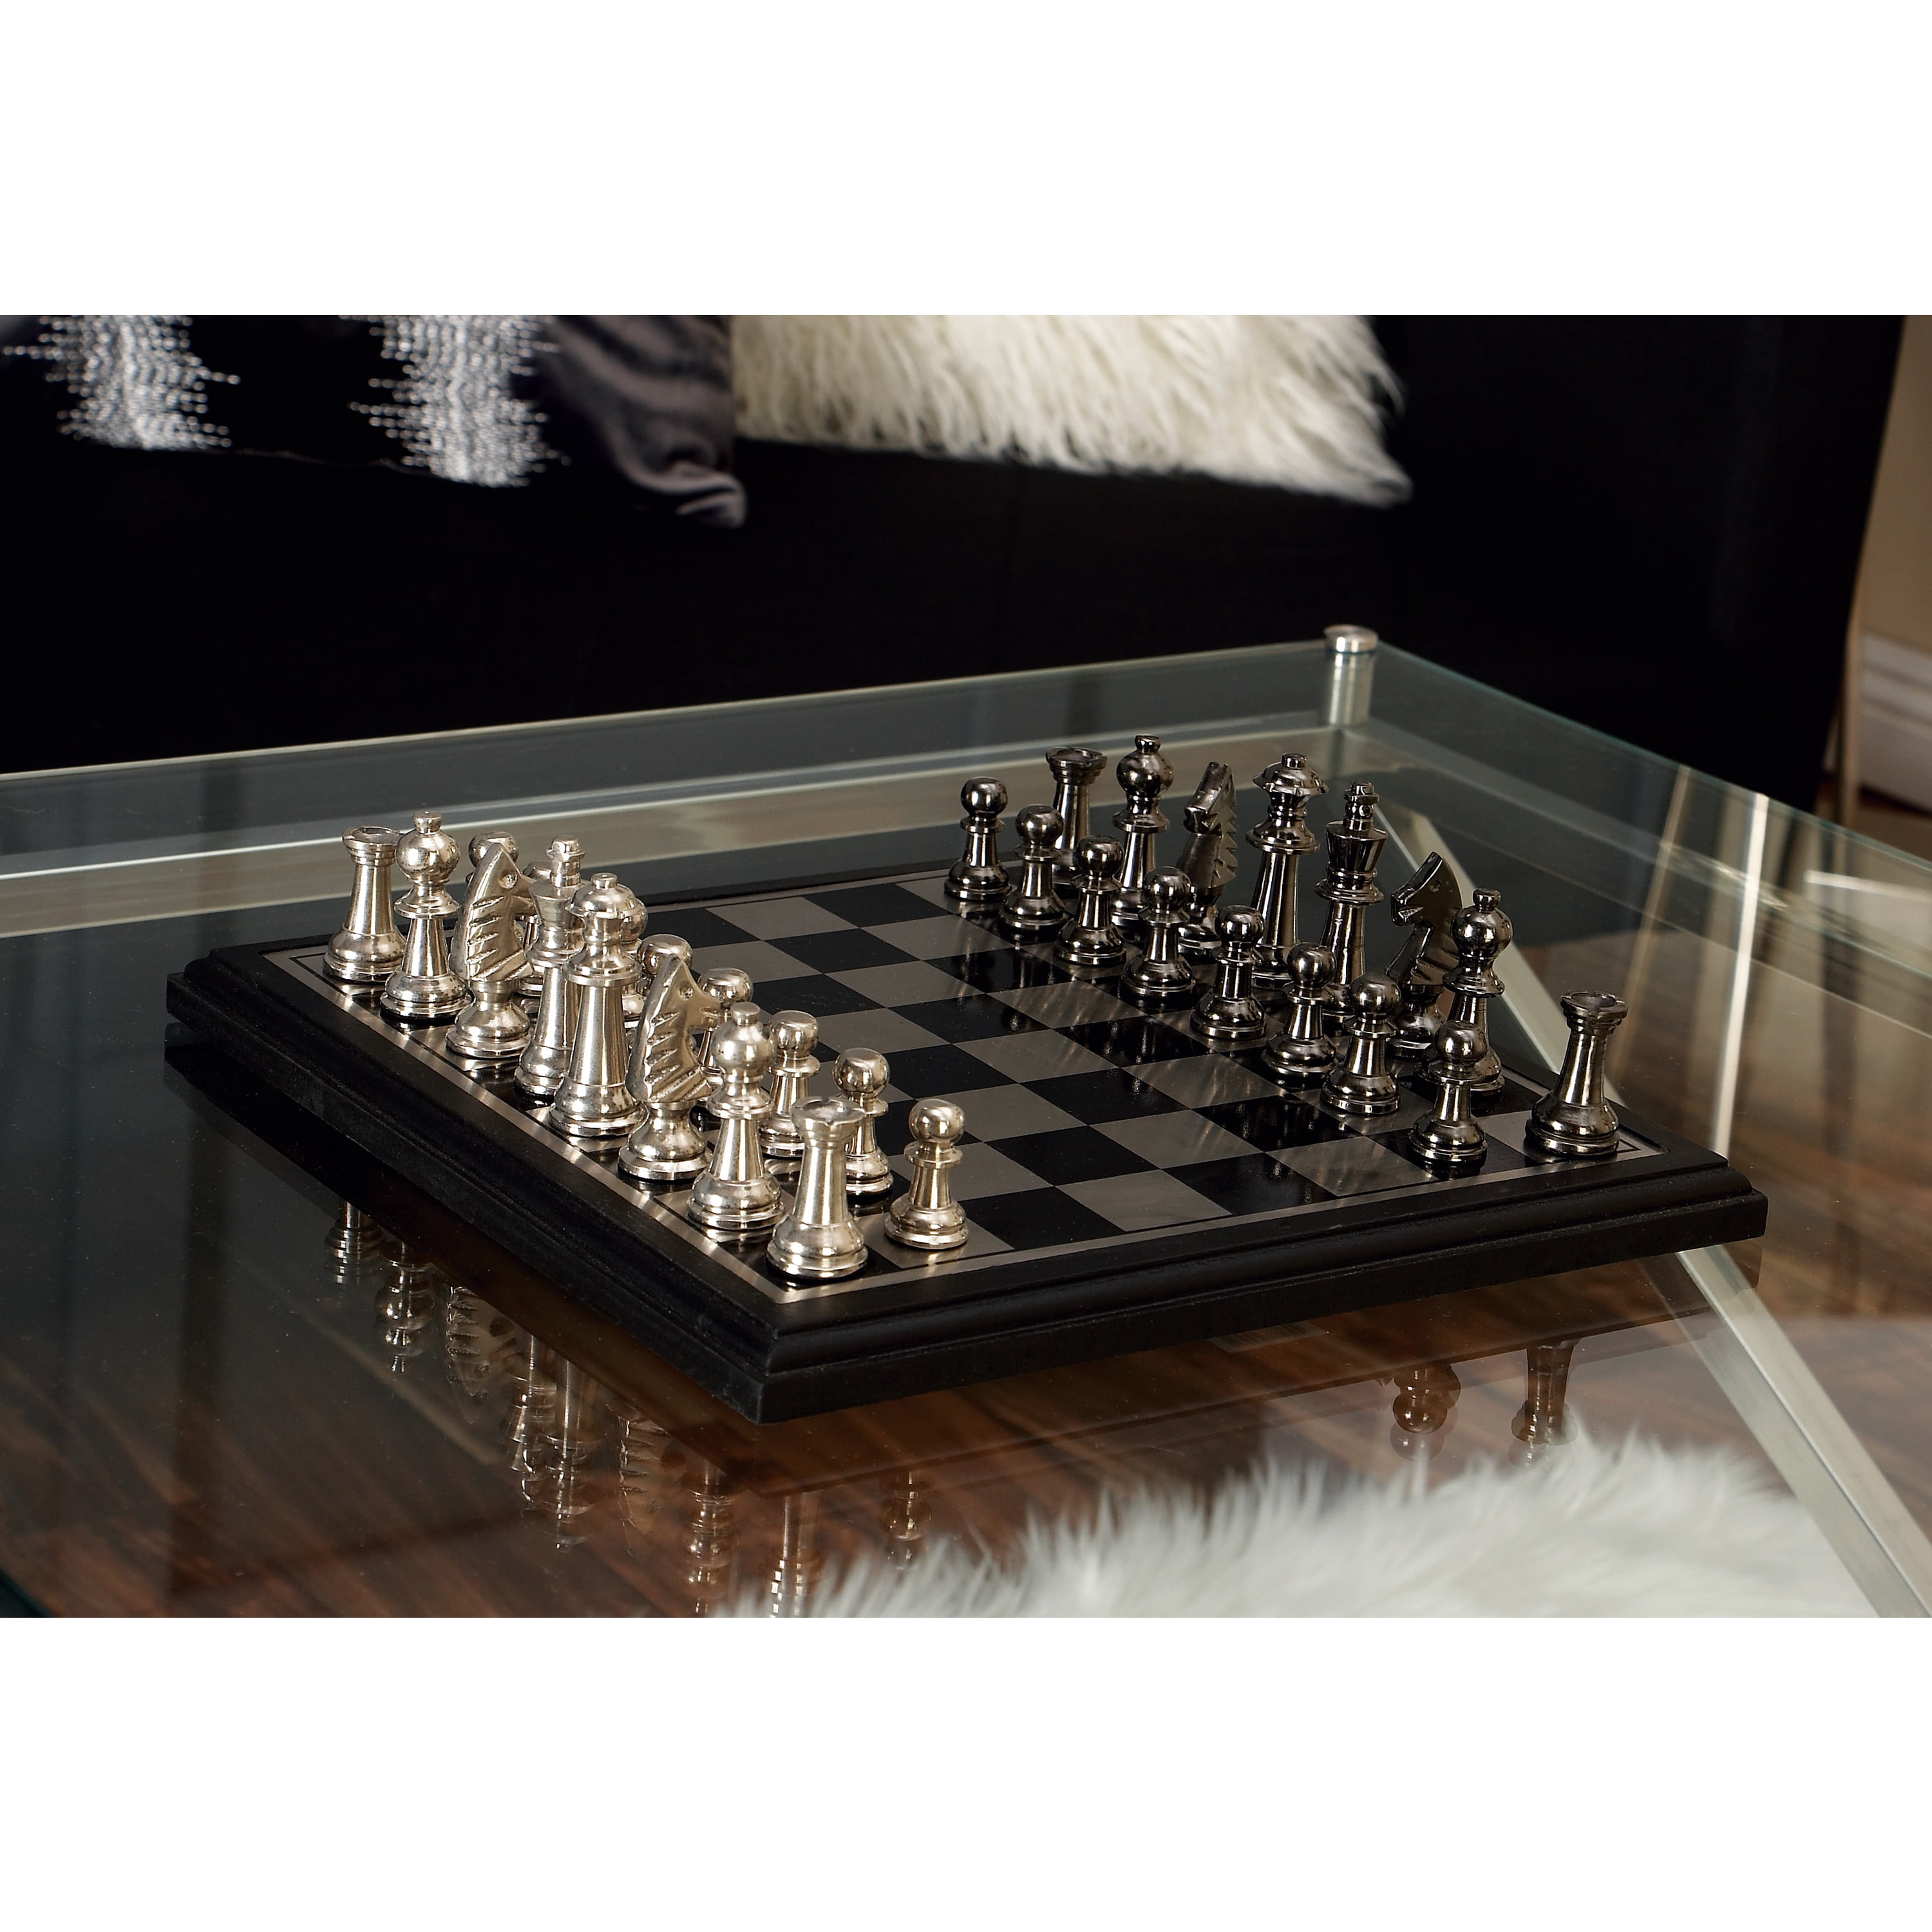 Wegiel Chess Set European Wooden Handmade Game Consul Chess Pieces and Board 